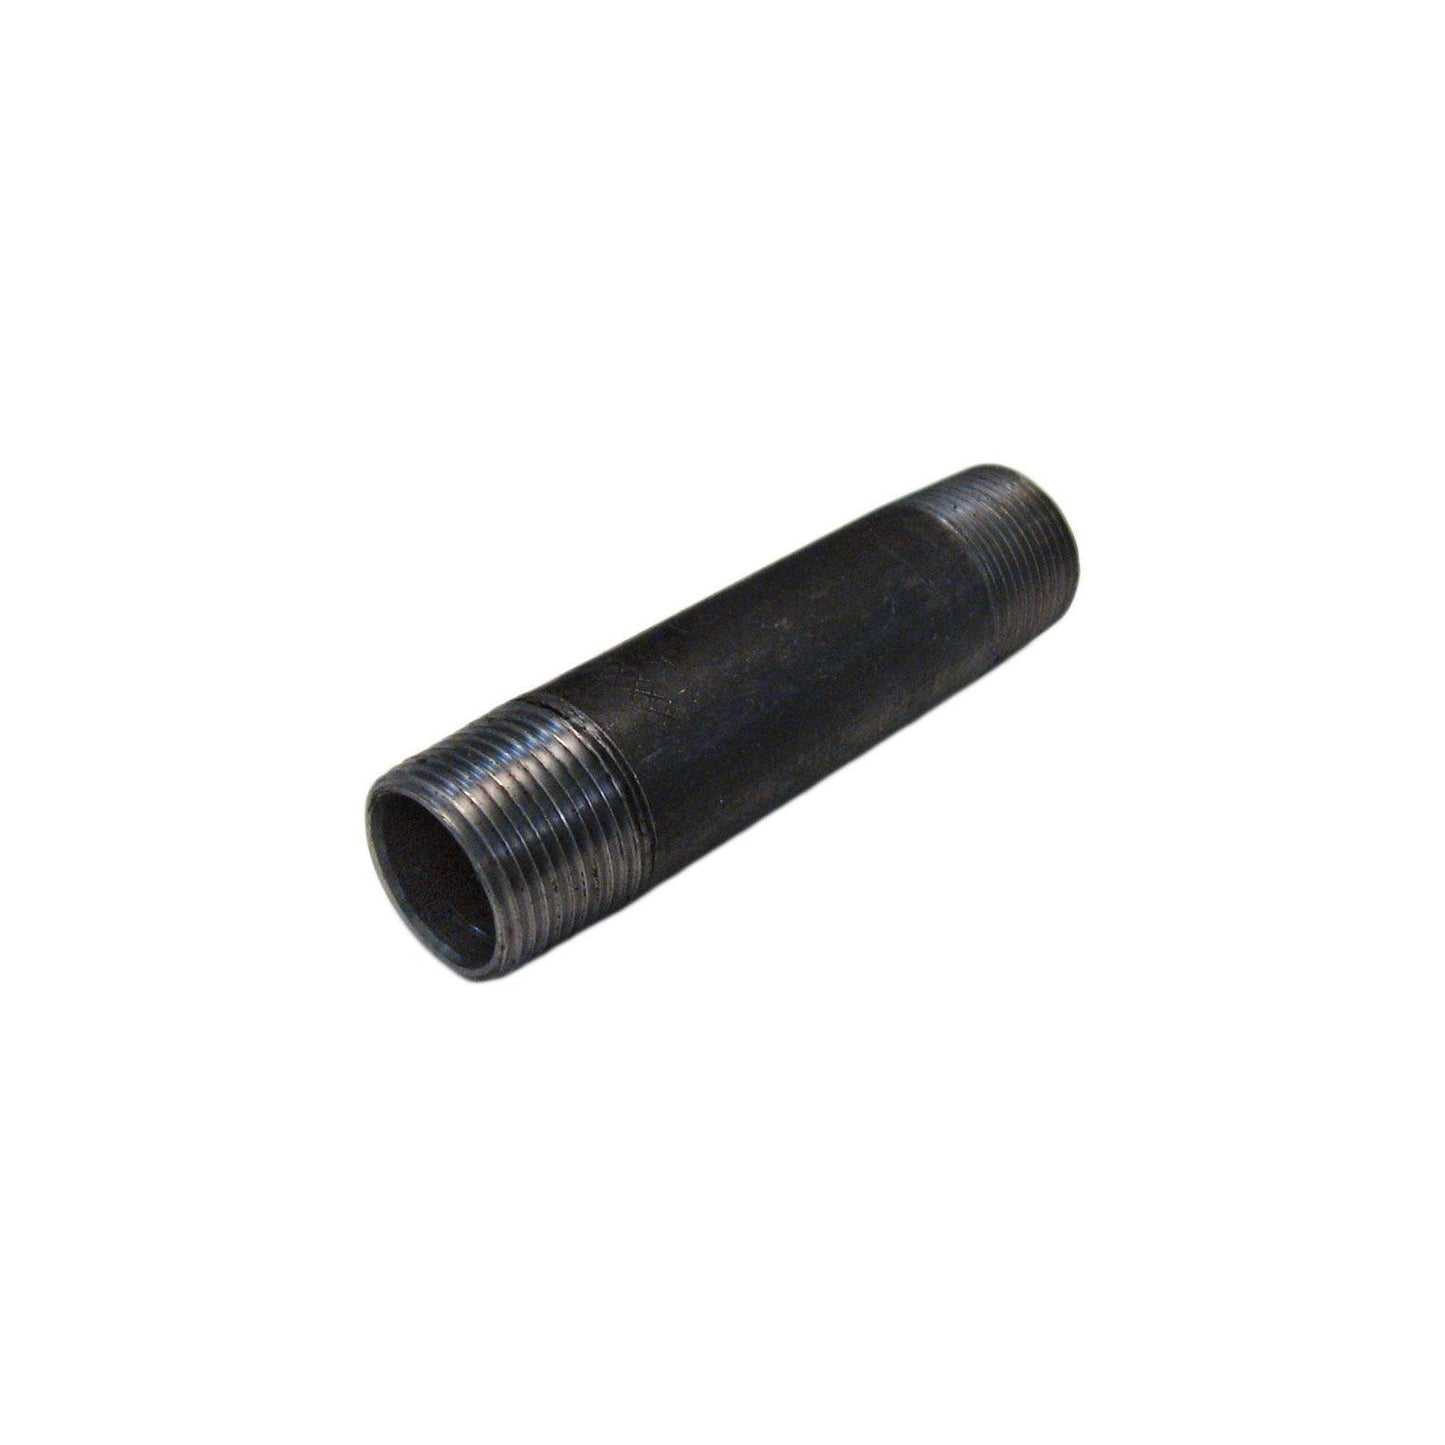 ZNB05412 - Black Steel Pipe Nipple - Domestic - 1" x 4-1/2"